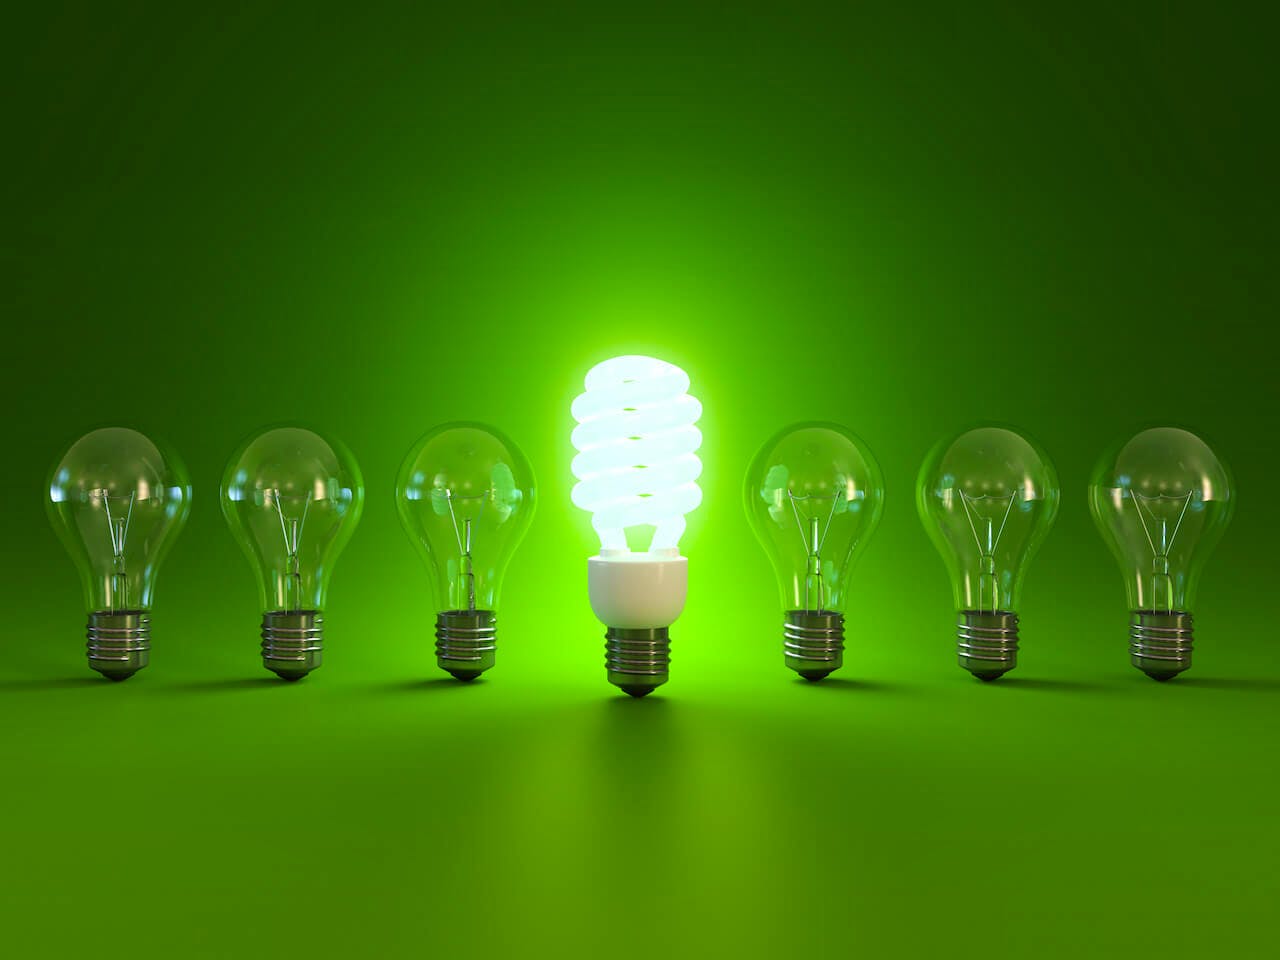 Energy-efficient light bulbs help save you money on your energy bill.